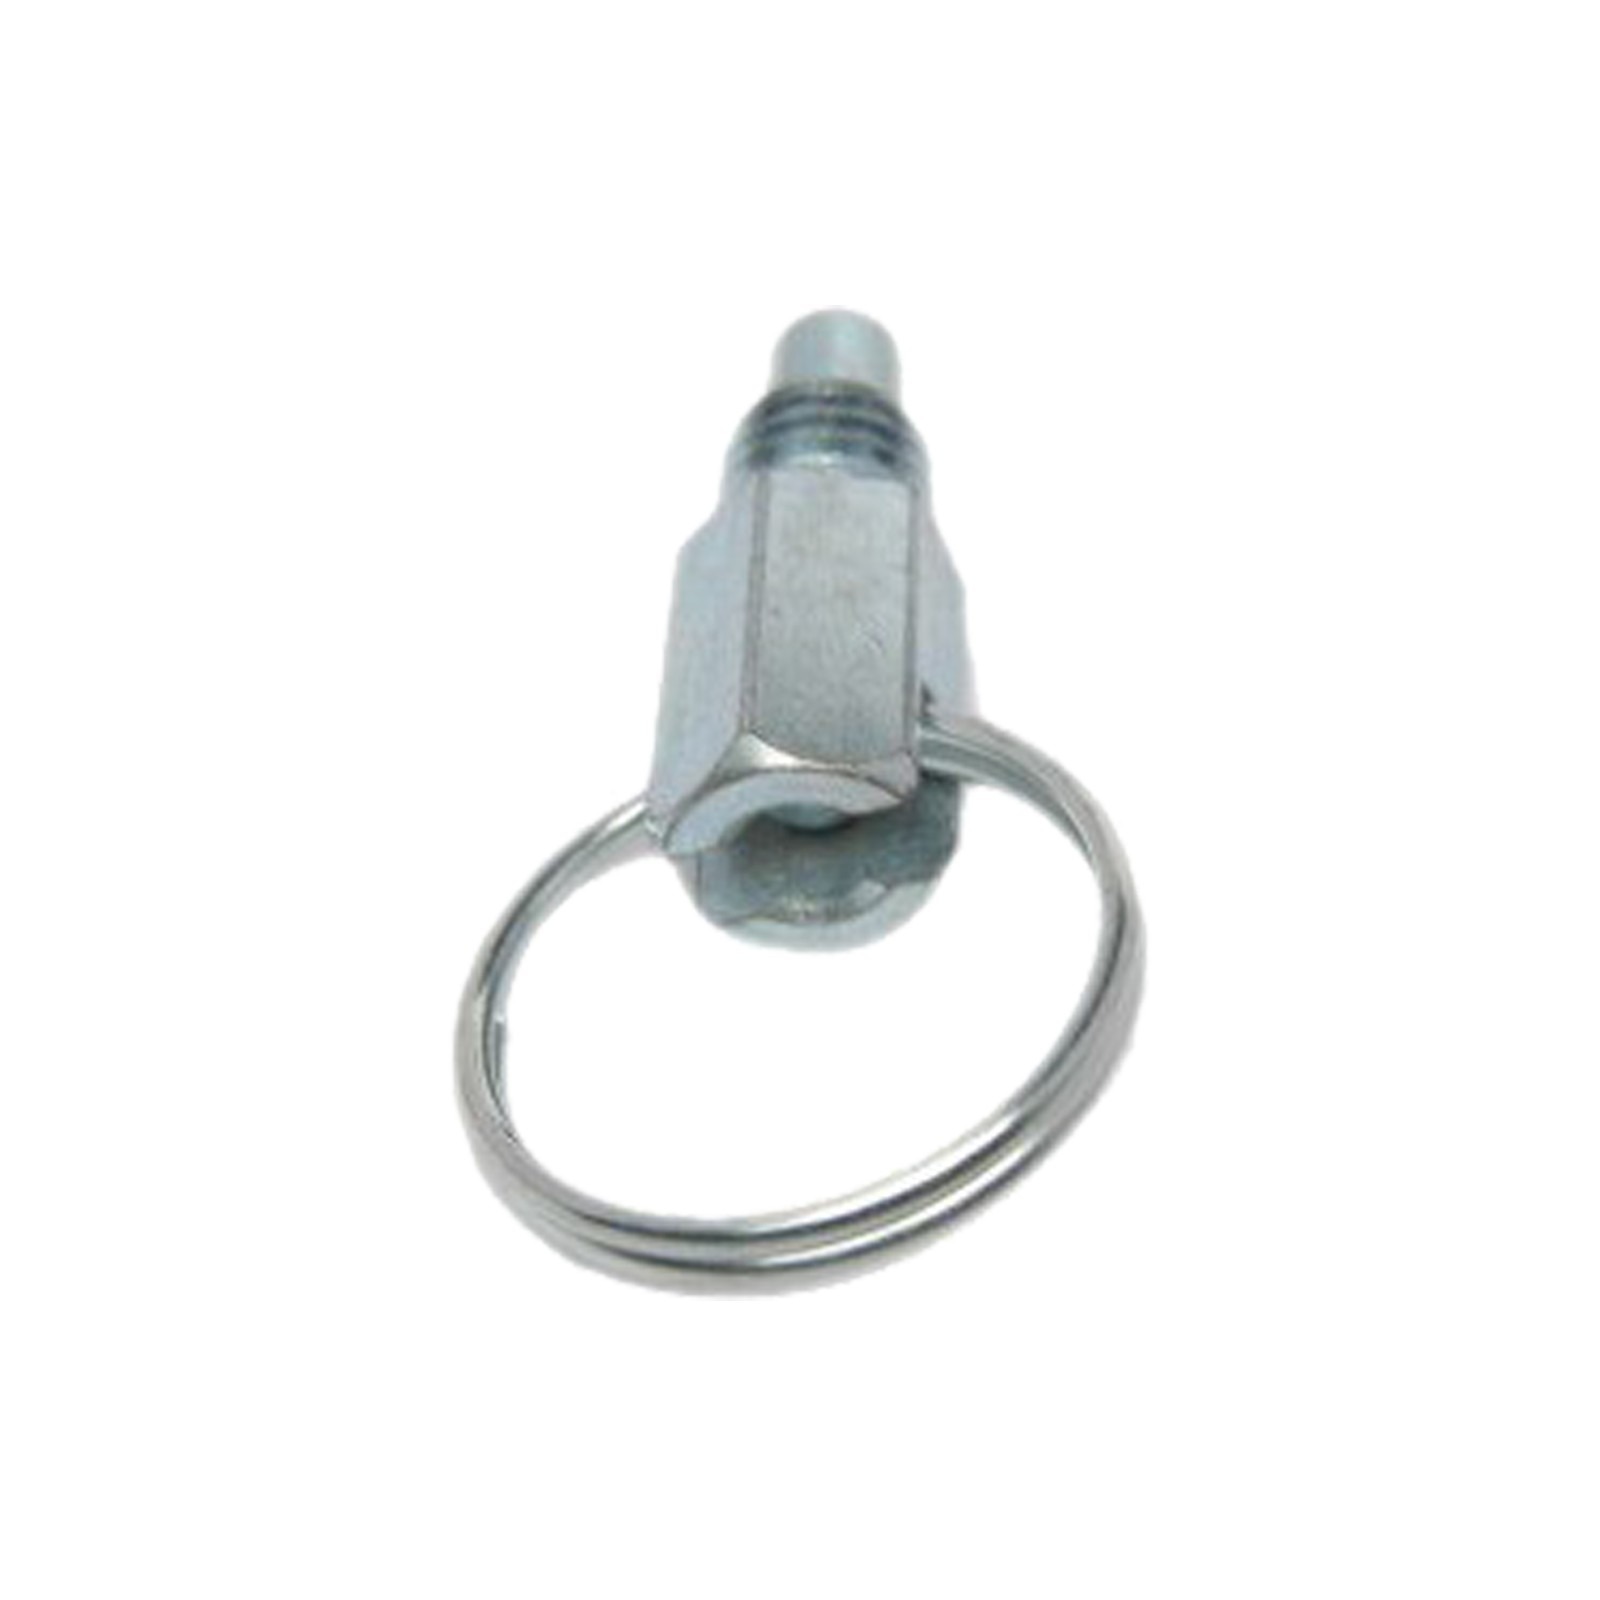 Global Truss Ringpin – Replacement Pull Lock Pin For St-132/St-157 341199 Accessories Digital DJ Gear